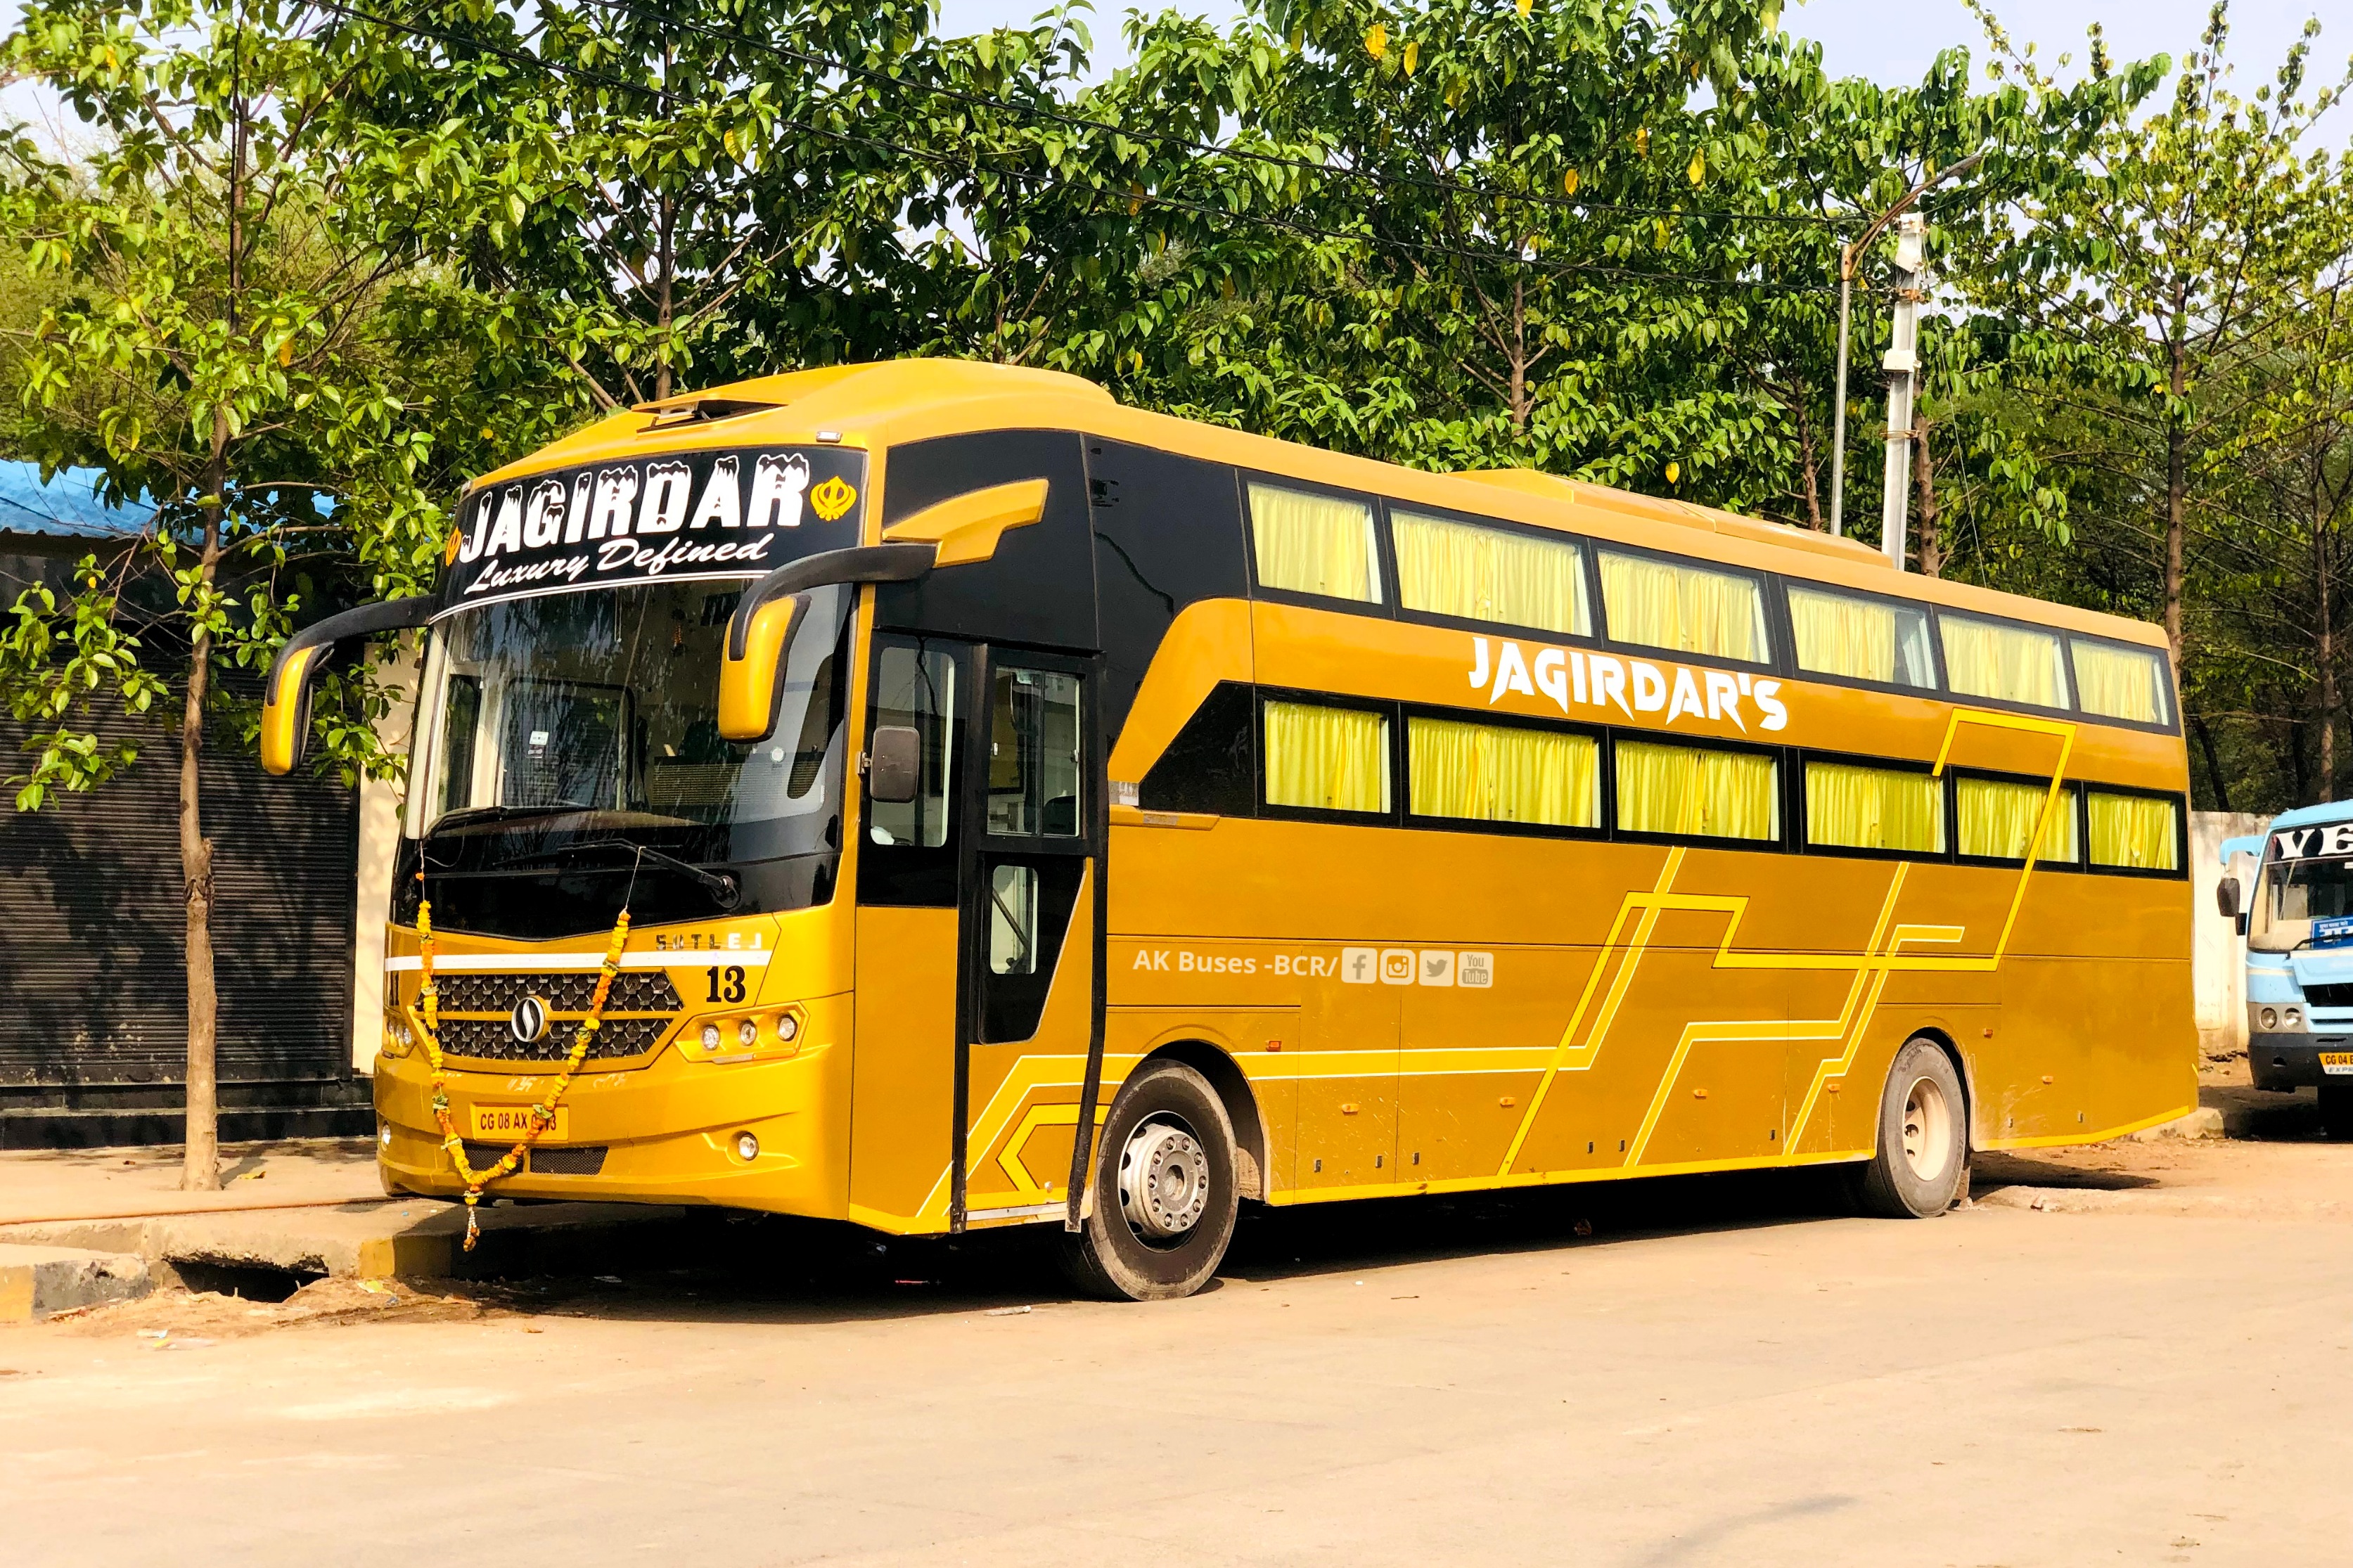 Jagirdar travels new sutlej s1800 bus